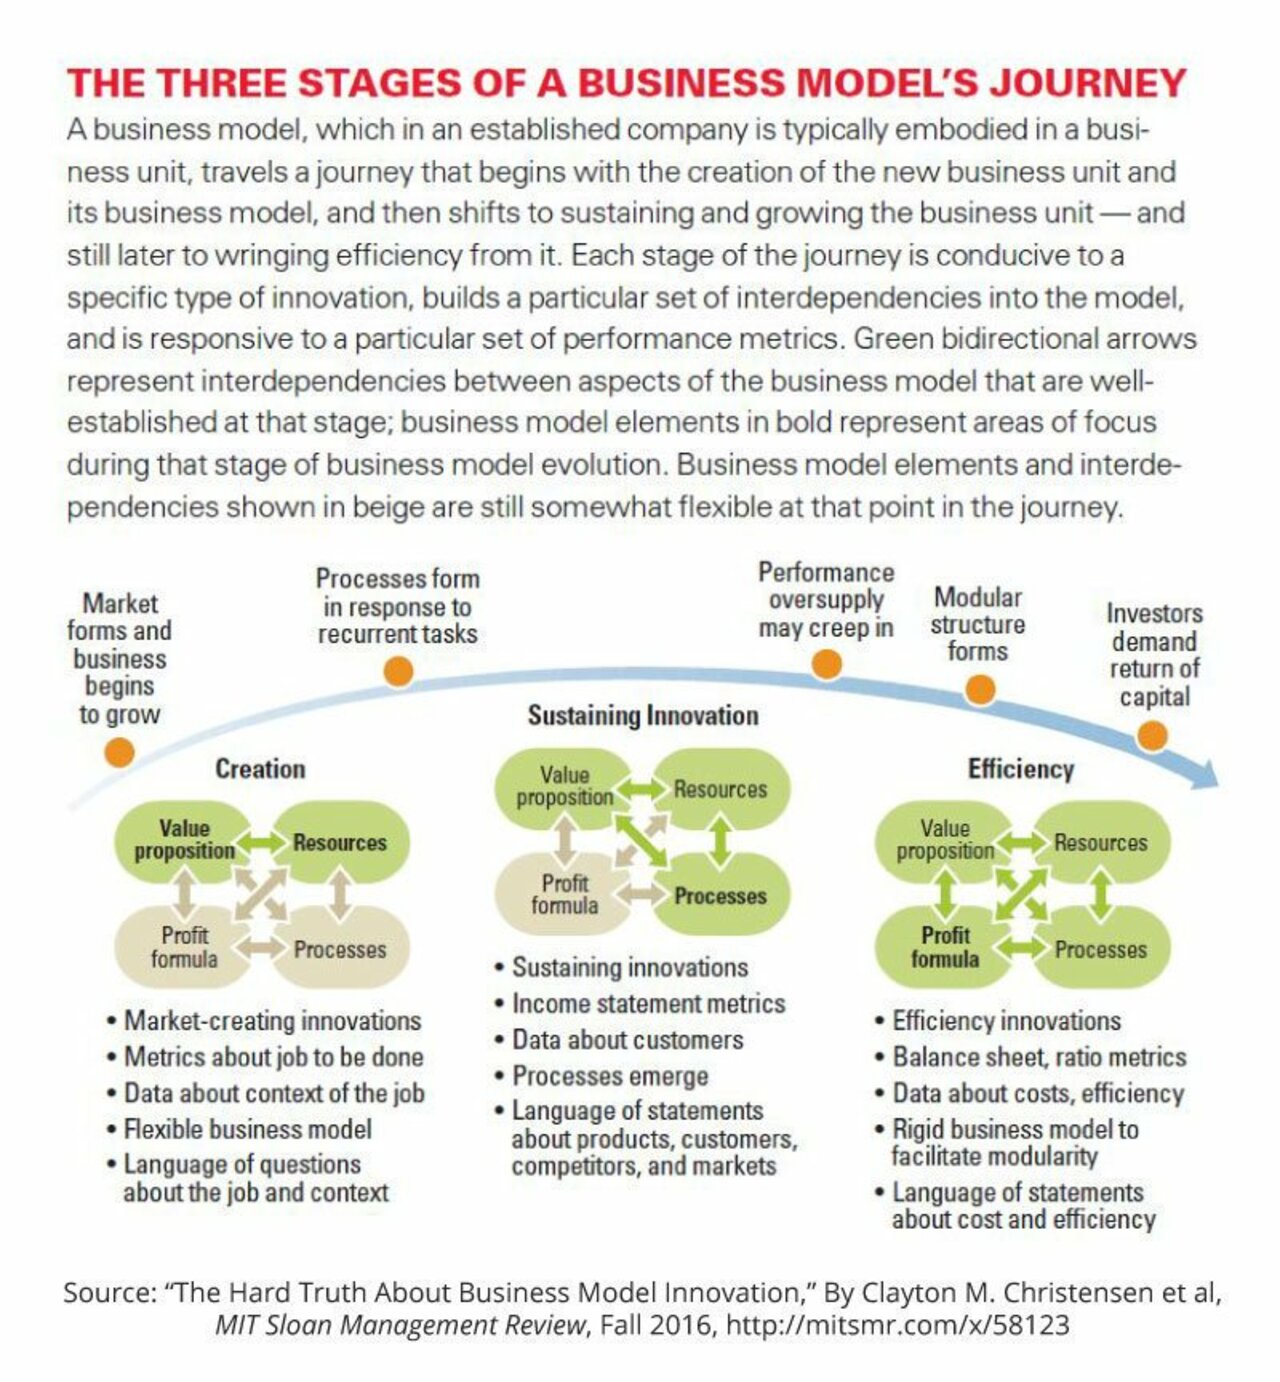 The three stages of a business Model's Journey. By @claychristensen @tom_bartman @van_bever_derek @HBS_Forum Source: @mitsmr  #innovation #Business #Data #Analytics #Leadership  Cc: @mvollmer1 @RichSimmondsZA @DrJDrooghaag @YuHelenYu @alvinfoo @TopCyberNews @techpearce2 https://t.co/Km6vecrJHQ